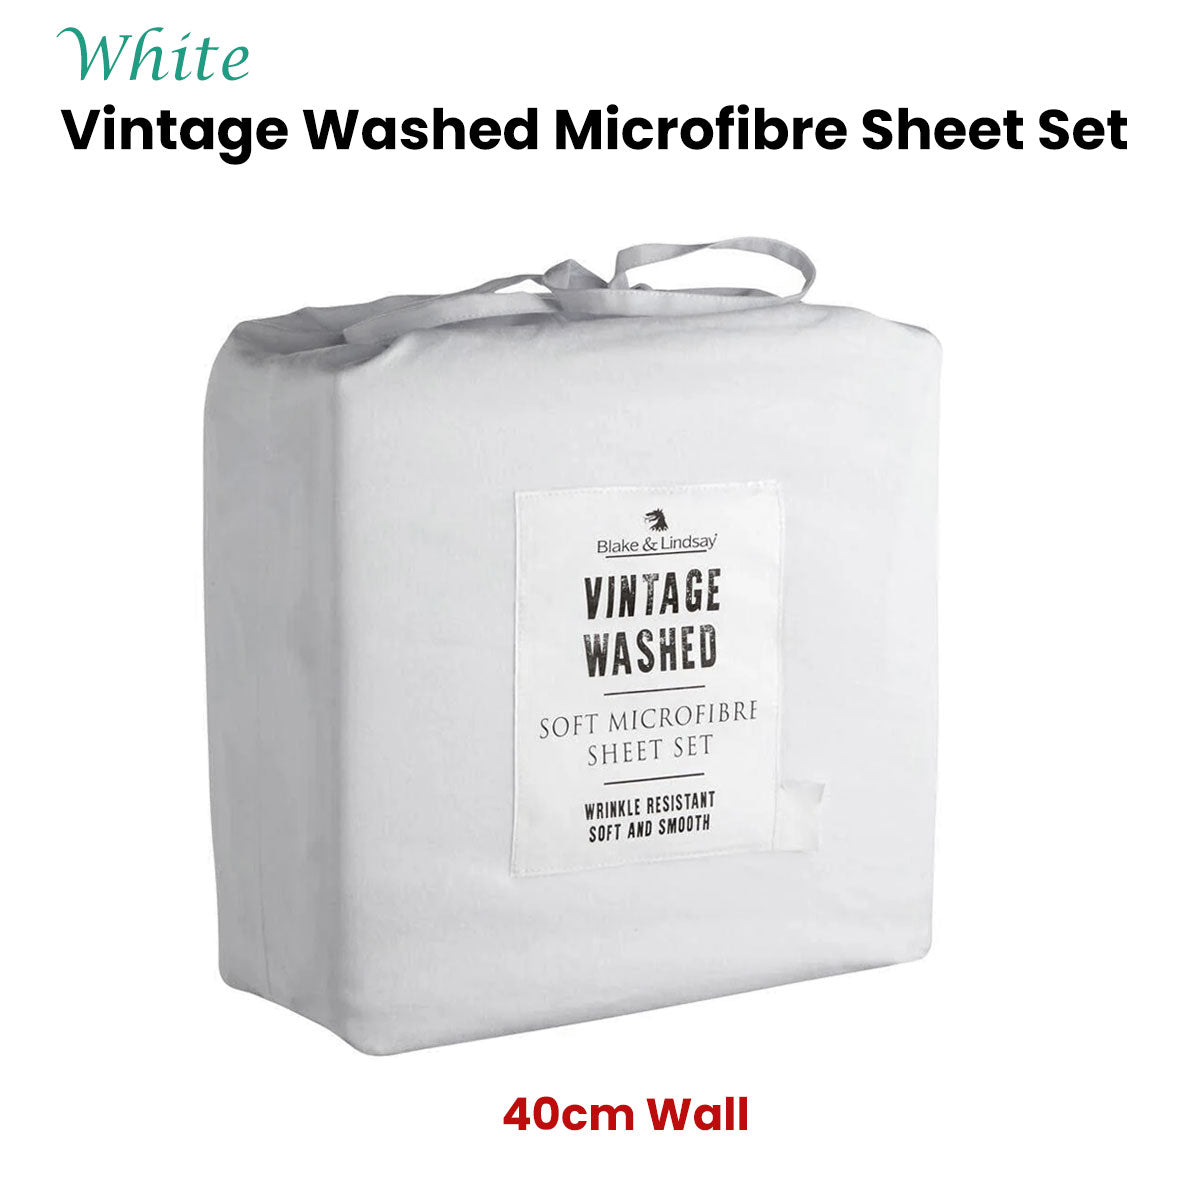 Blake & Lindsay White Vintage Washed Microfibre Sheet Set 40cm Wall Double